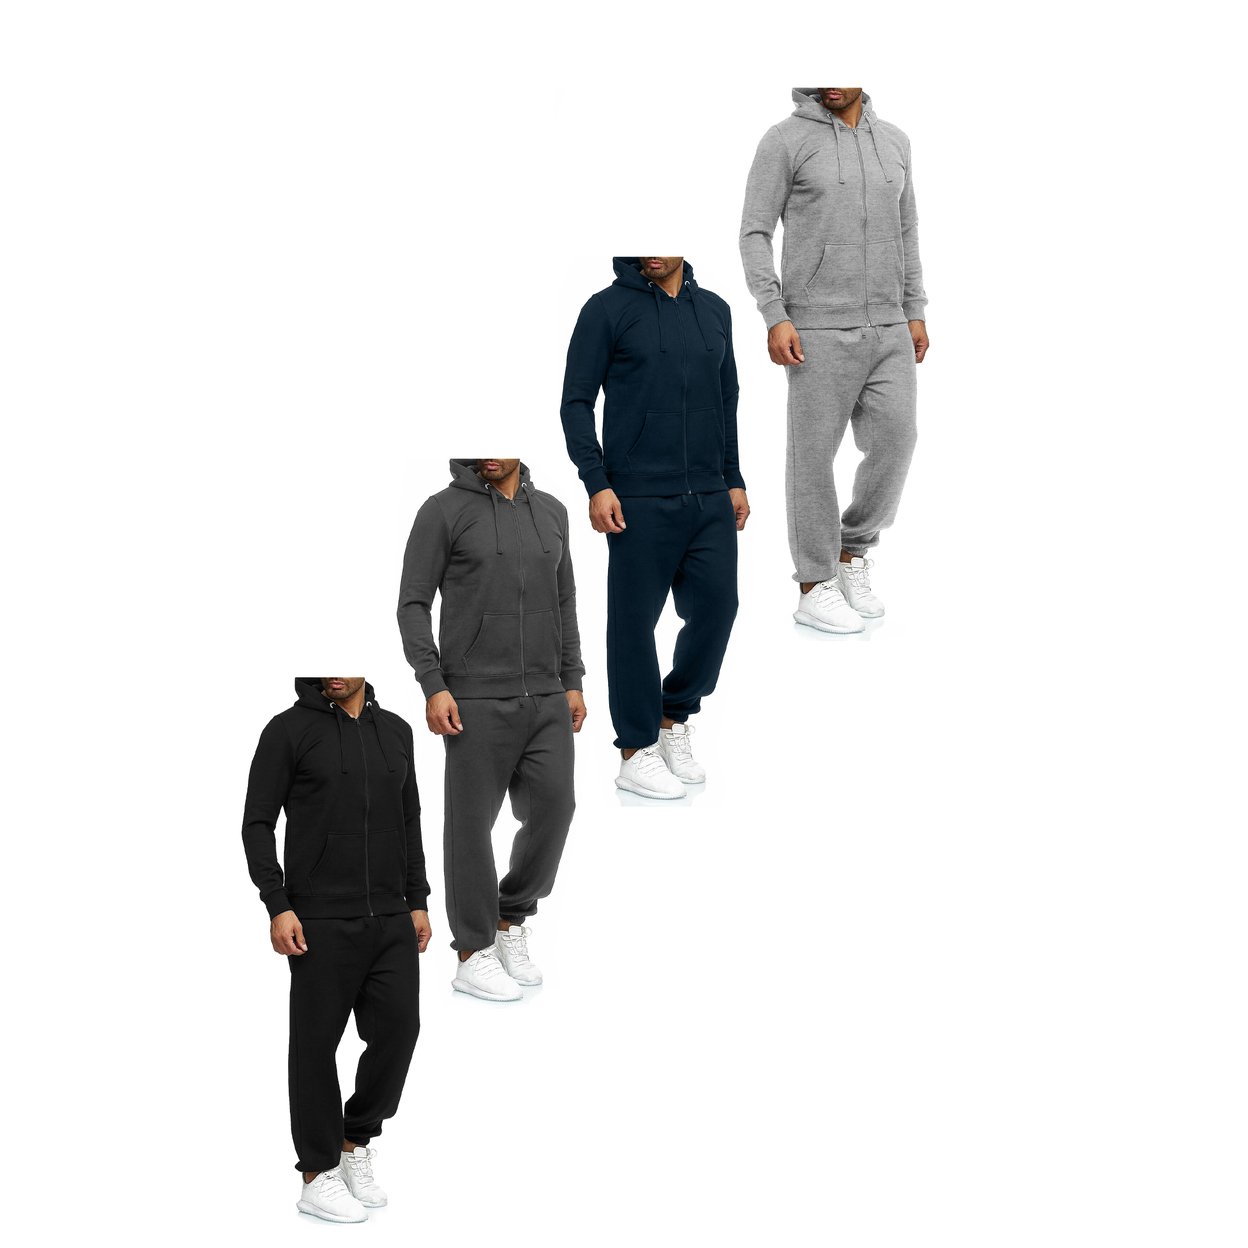 2-Pack: Men's Casual Big & Tall Athletic Active Winter Warm Fleece Lined Full Zip Tracksuit Jogger Set - Navy, Medium